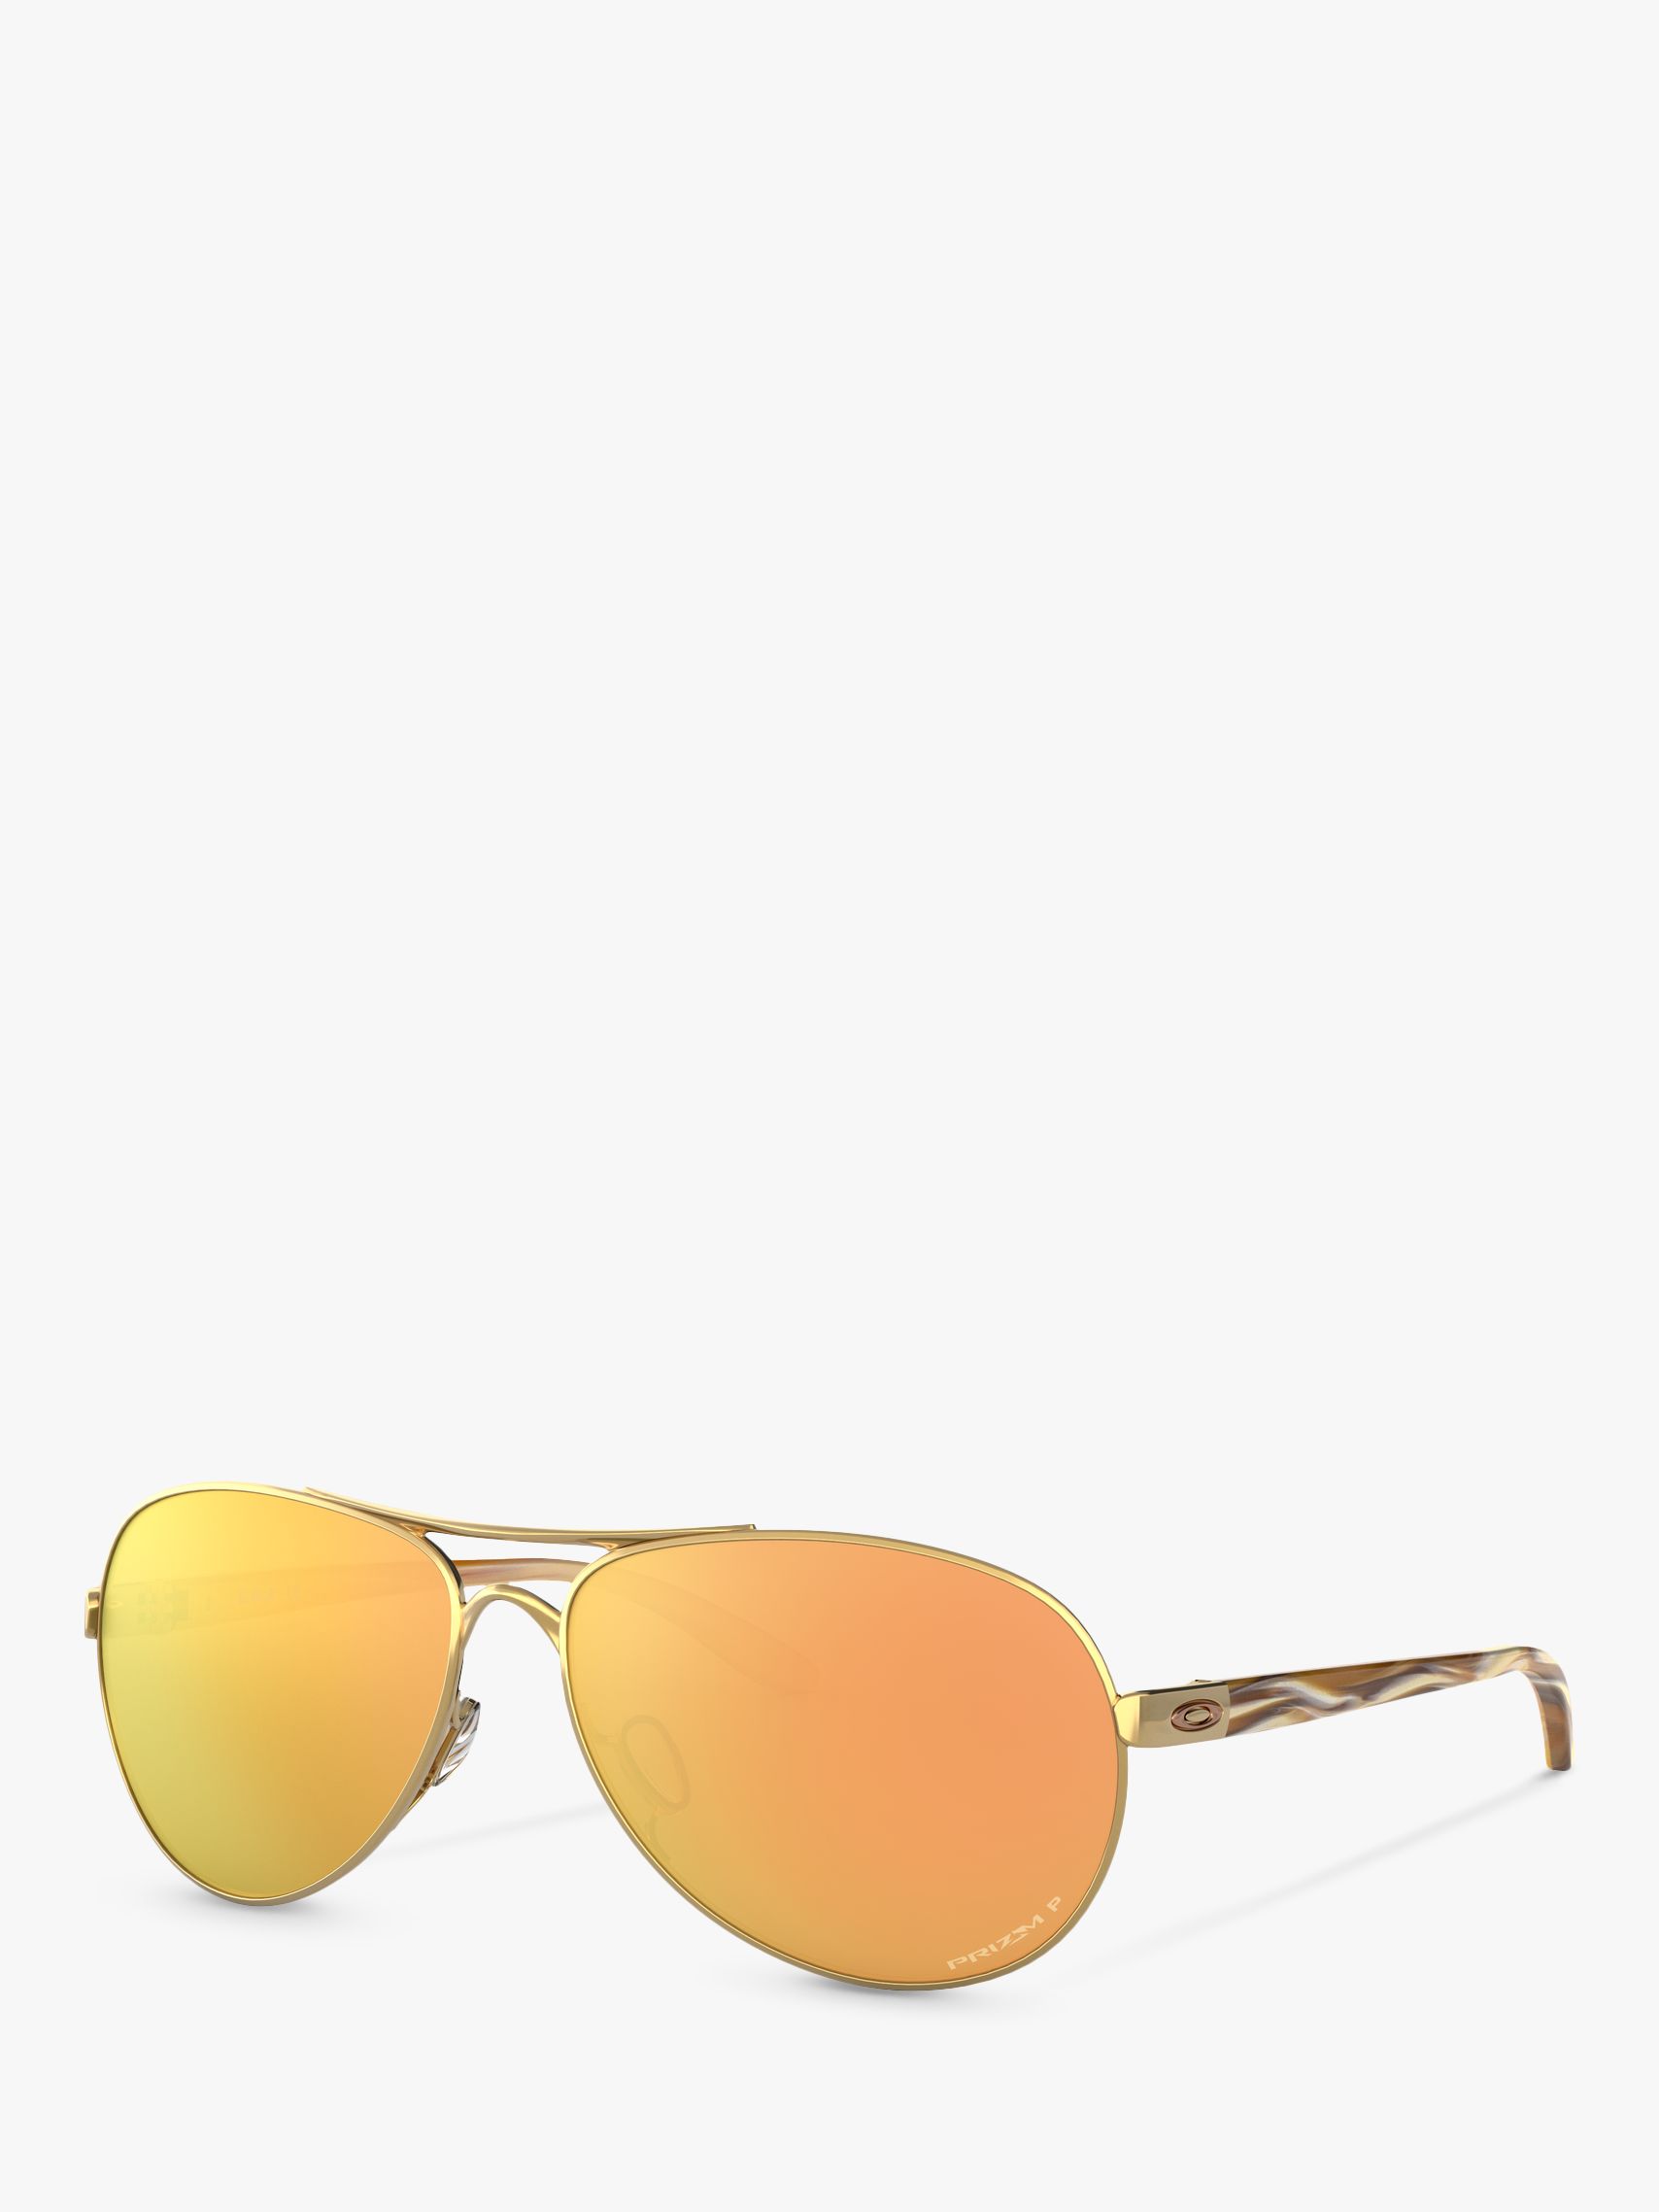 oakley women's aviator polarized sunglasses